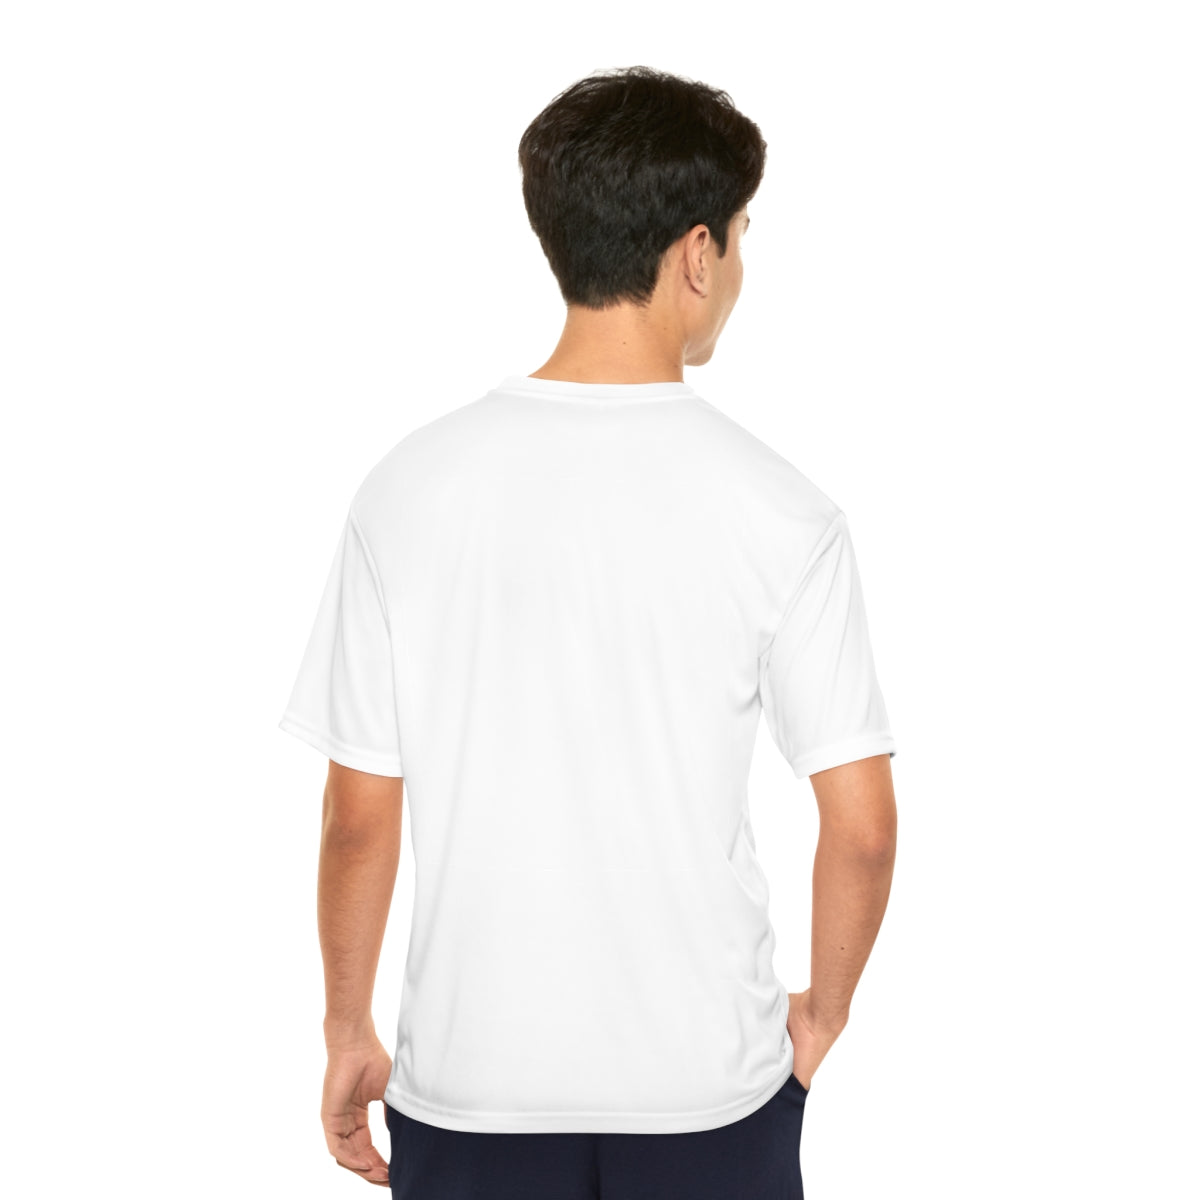 Freeburg Midgets Basketball Performance T-Shirt